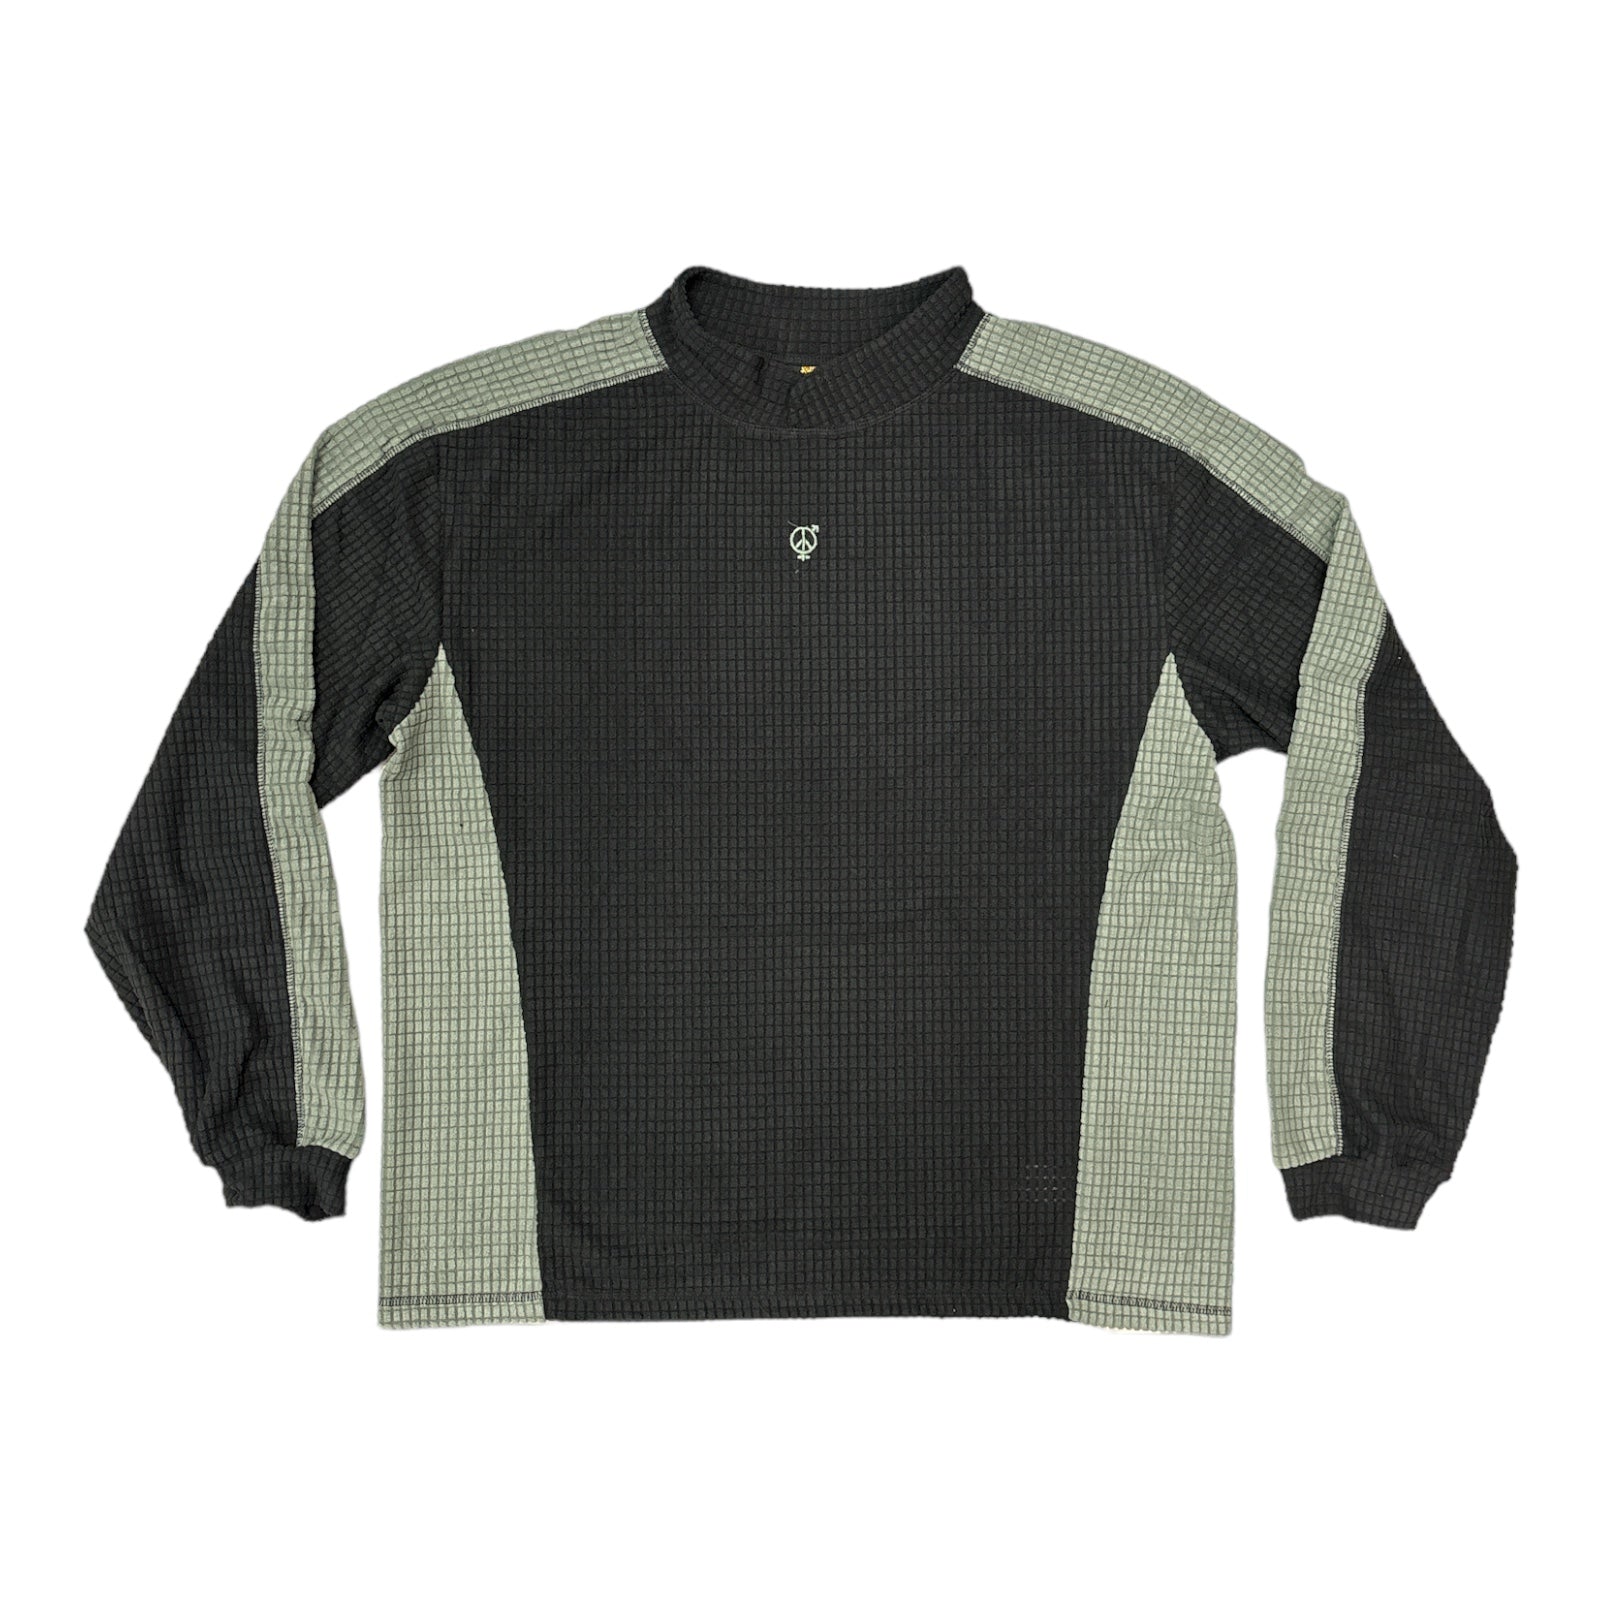 SEXHIPPIES Grid Fleece Jersey- Black/Army